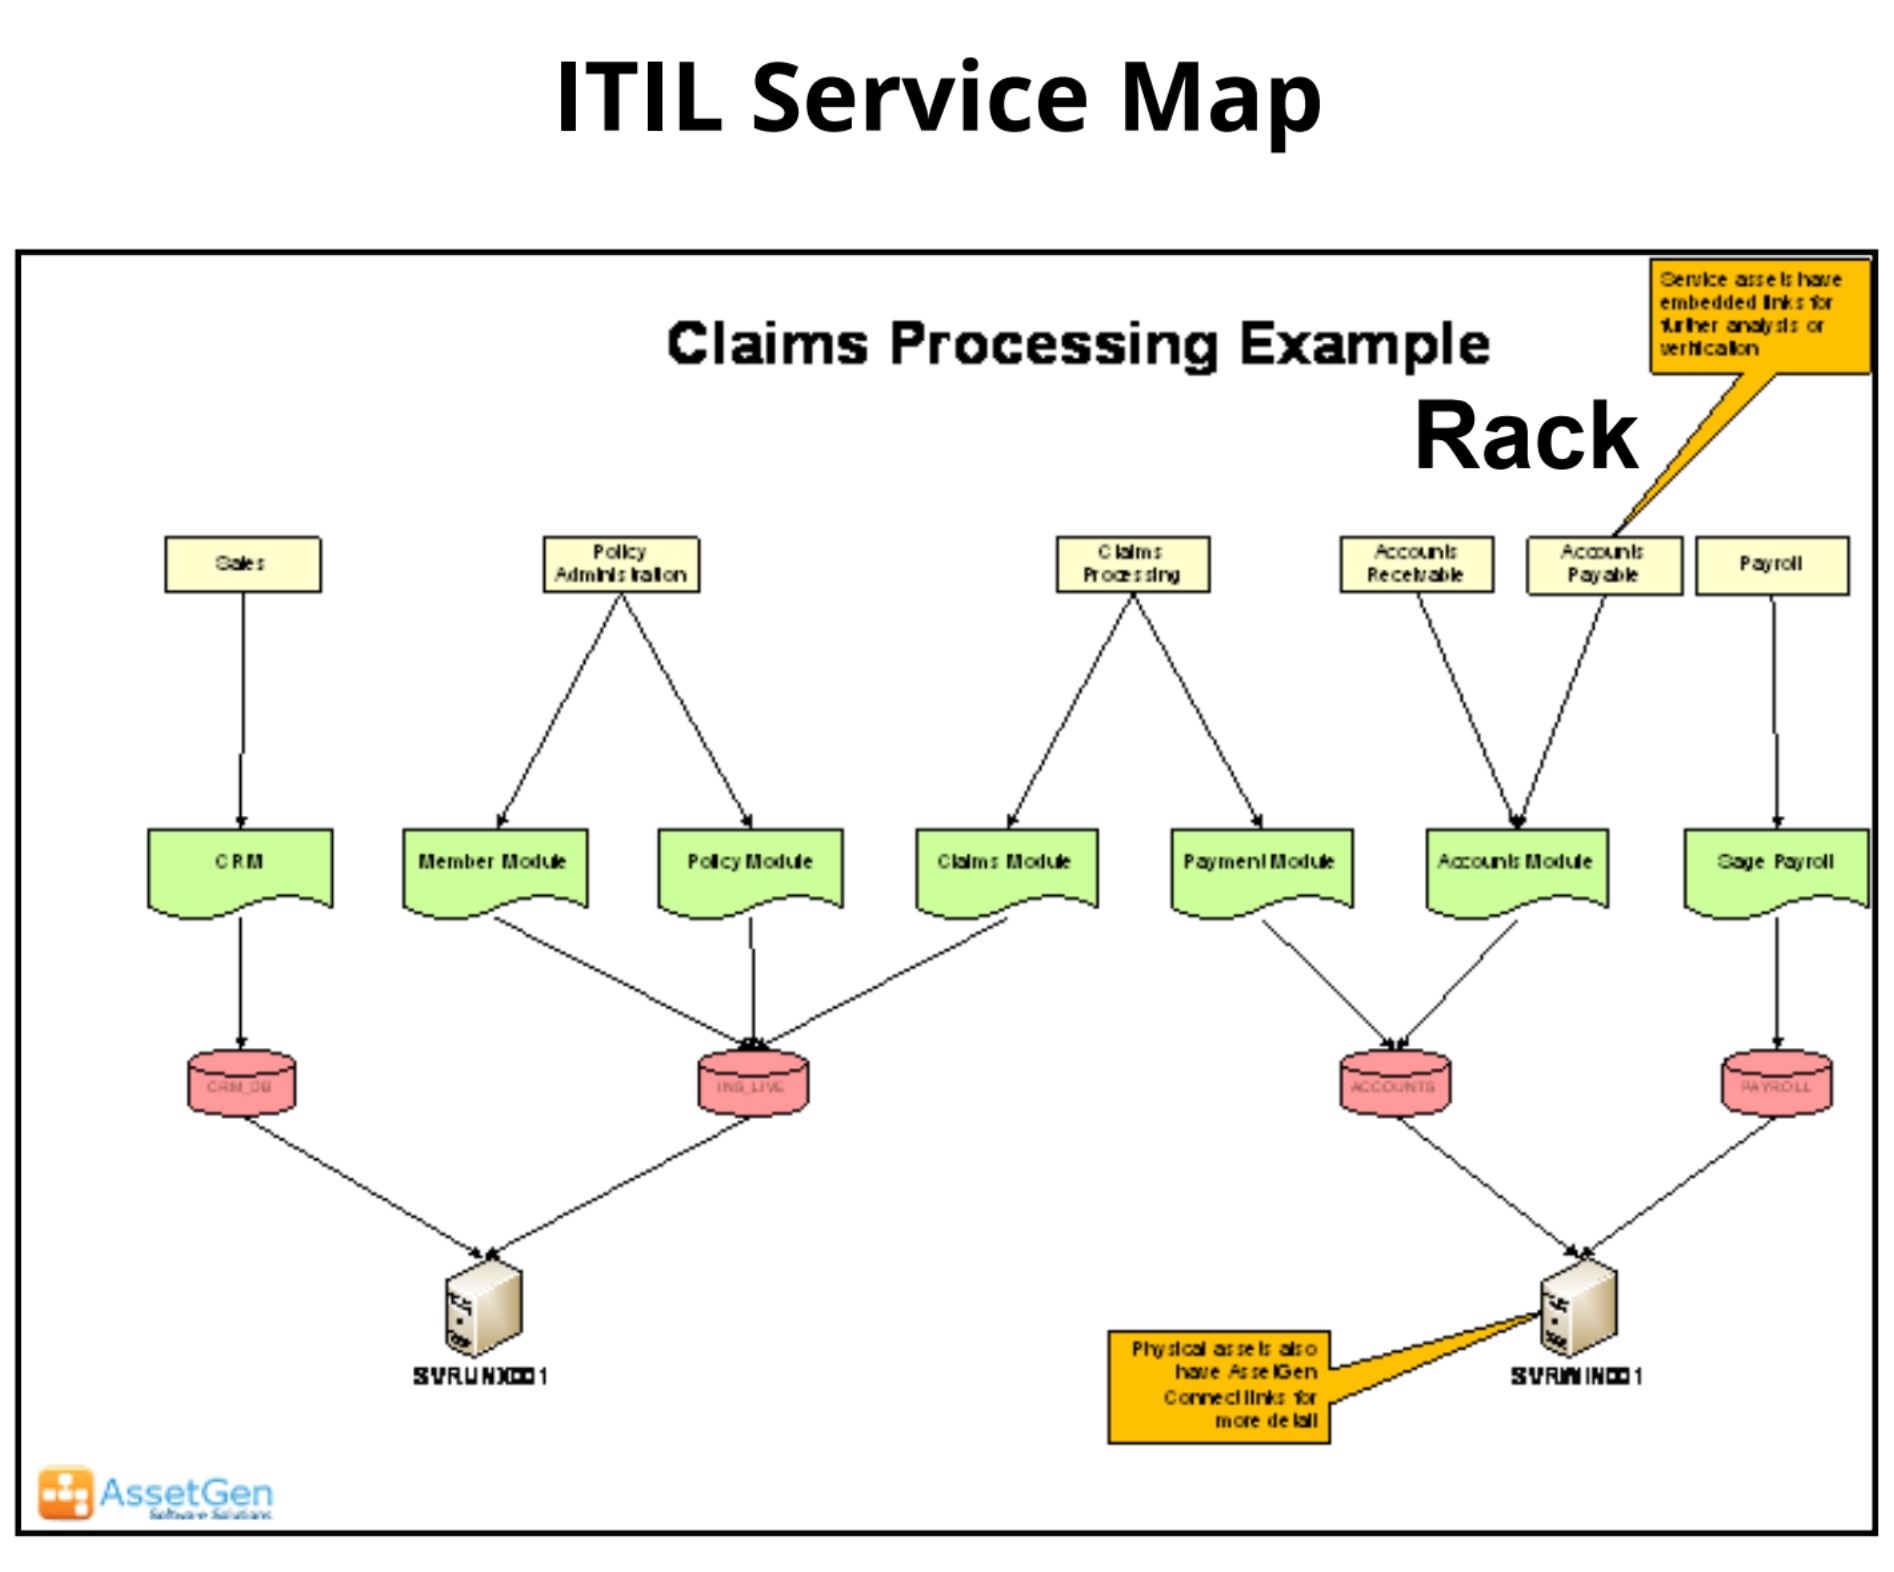 ITIL Service Map